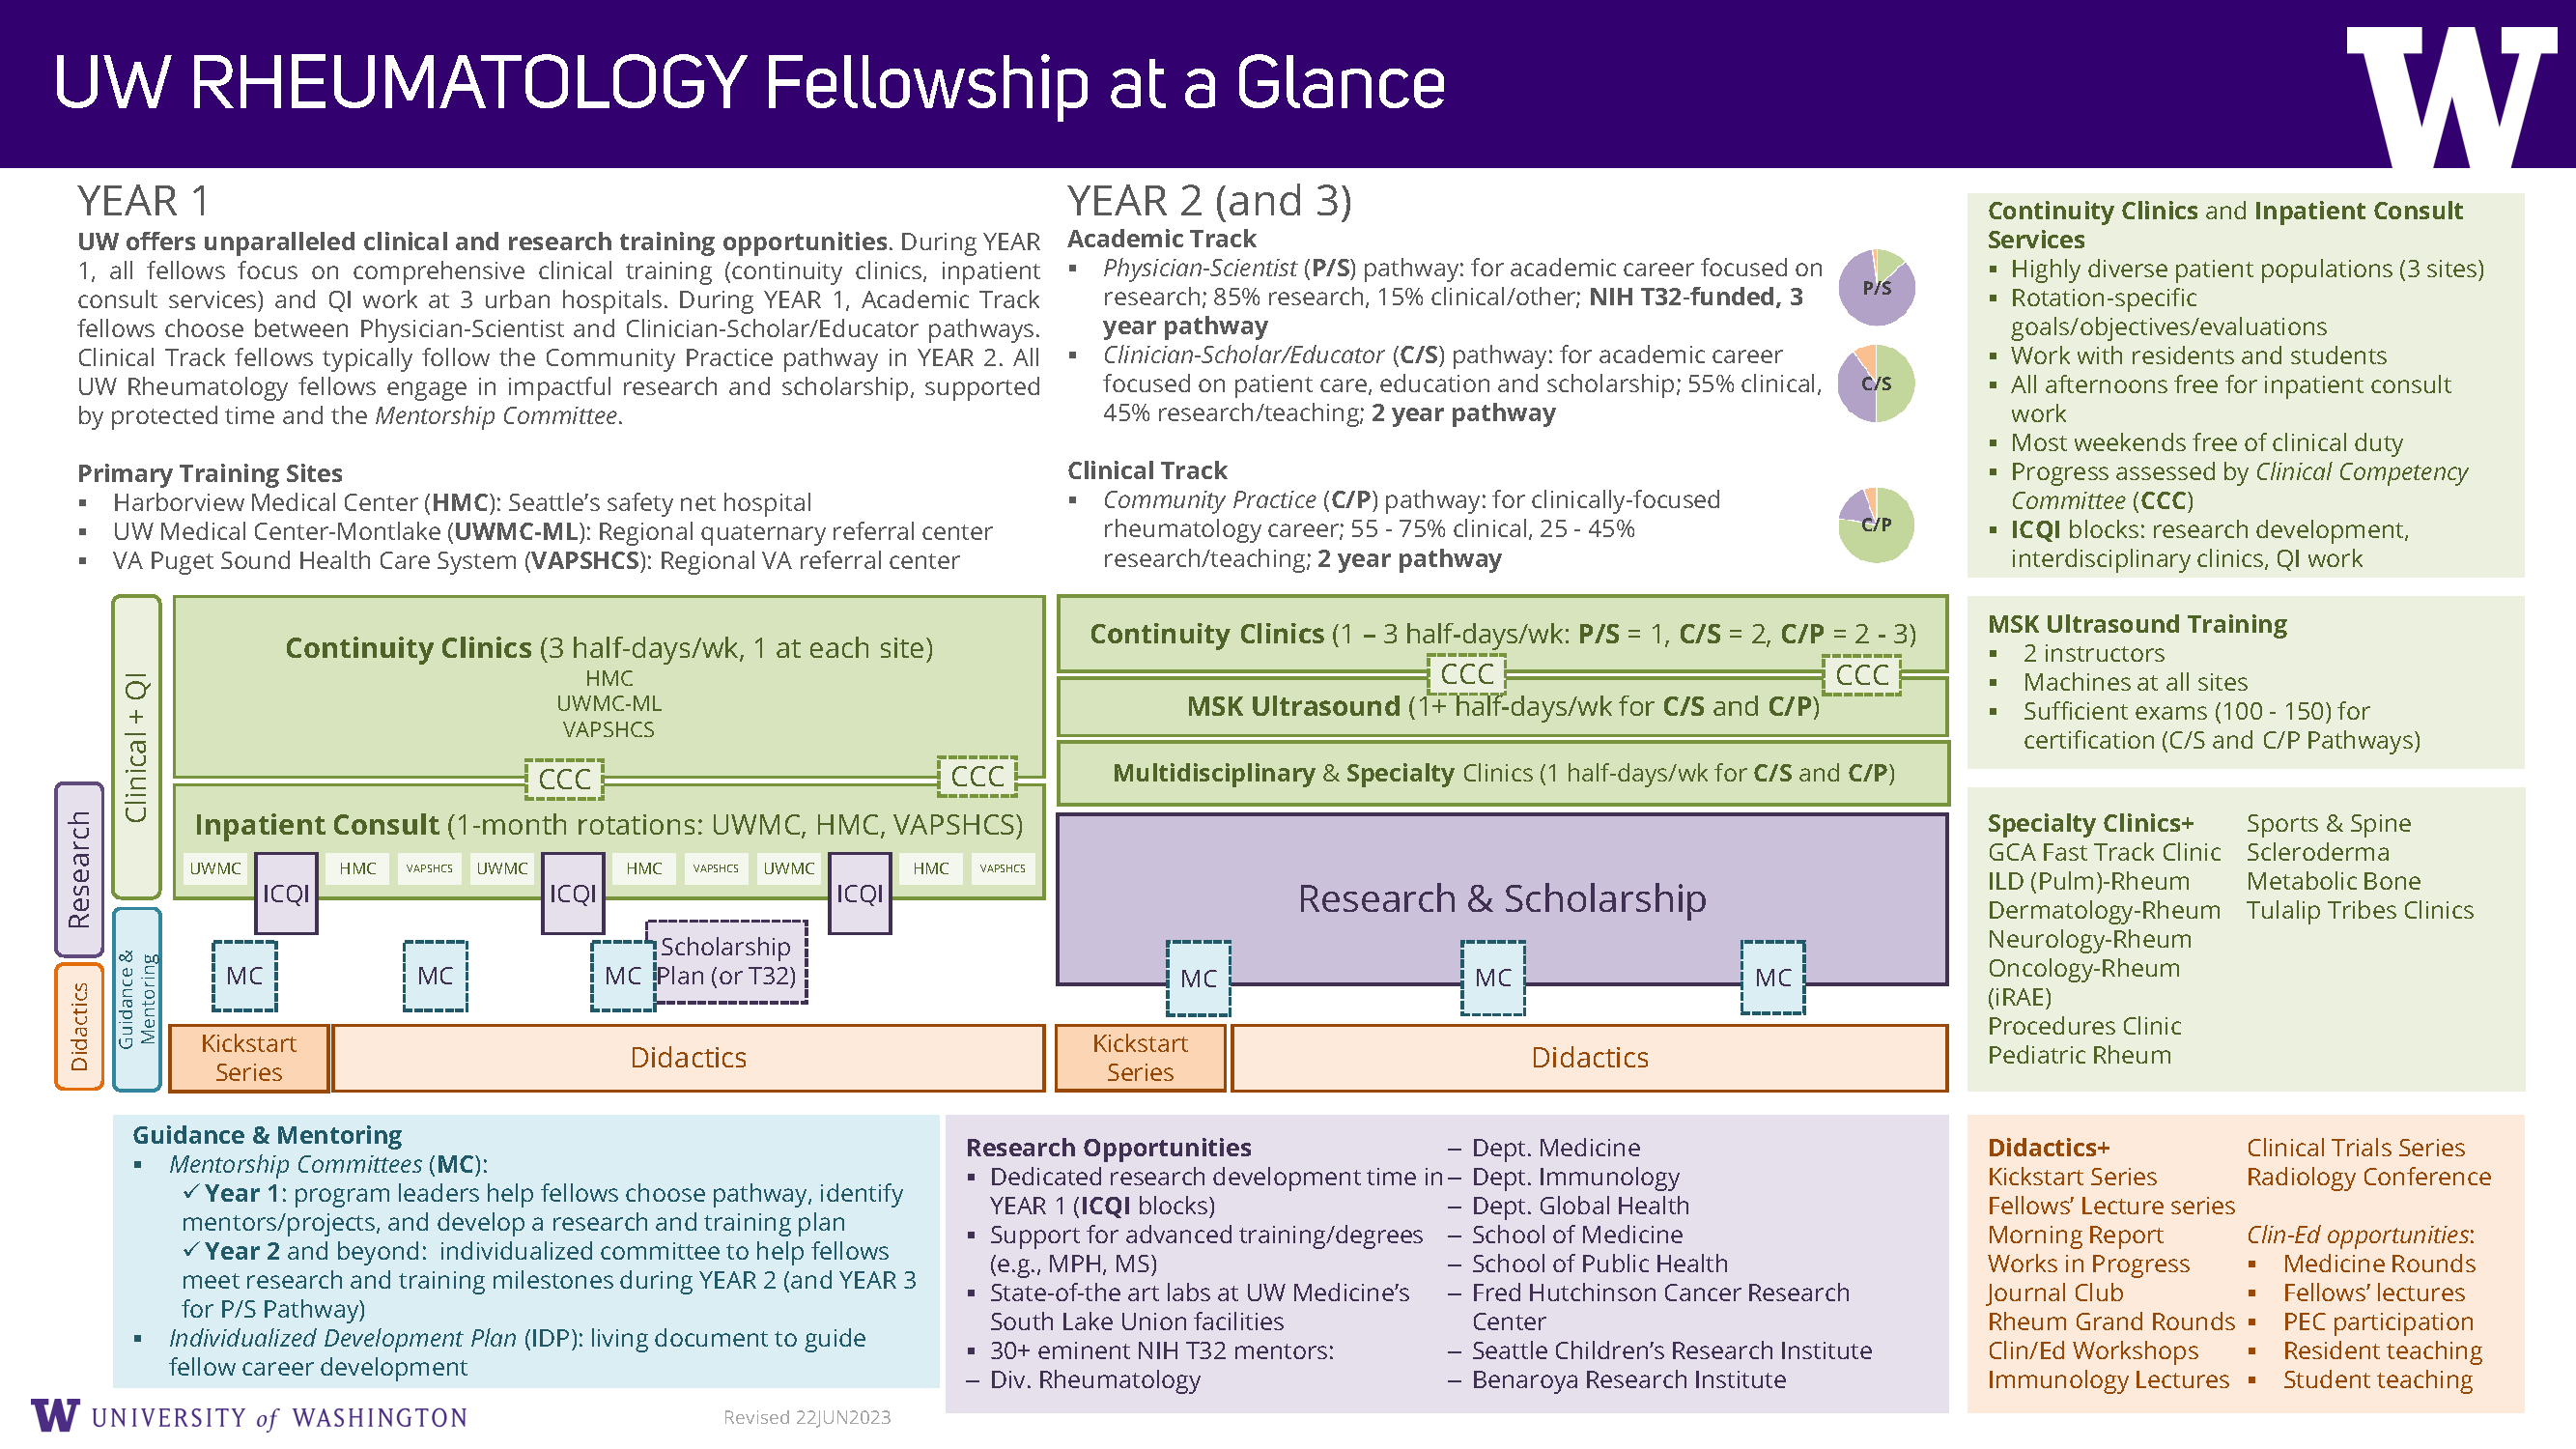 Fellowship at a glance slide